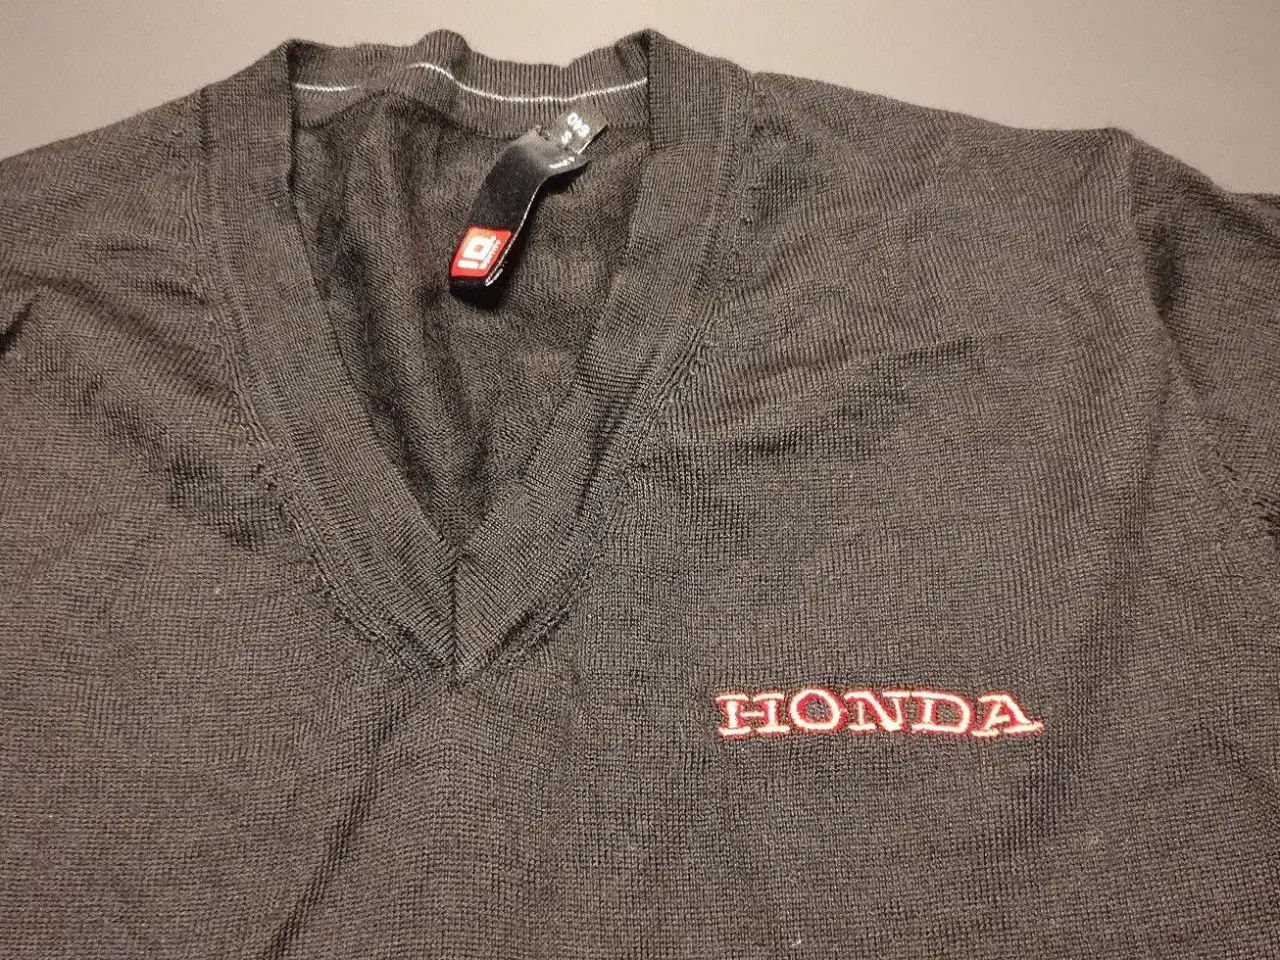 Billede 6 - 6 stk. Honda t-shirts + 3 stk. pullovers